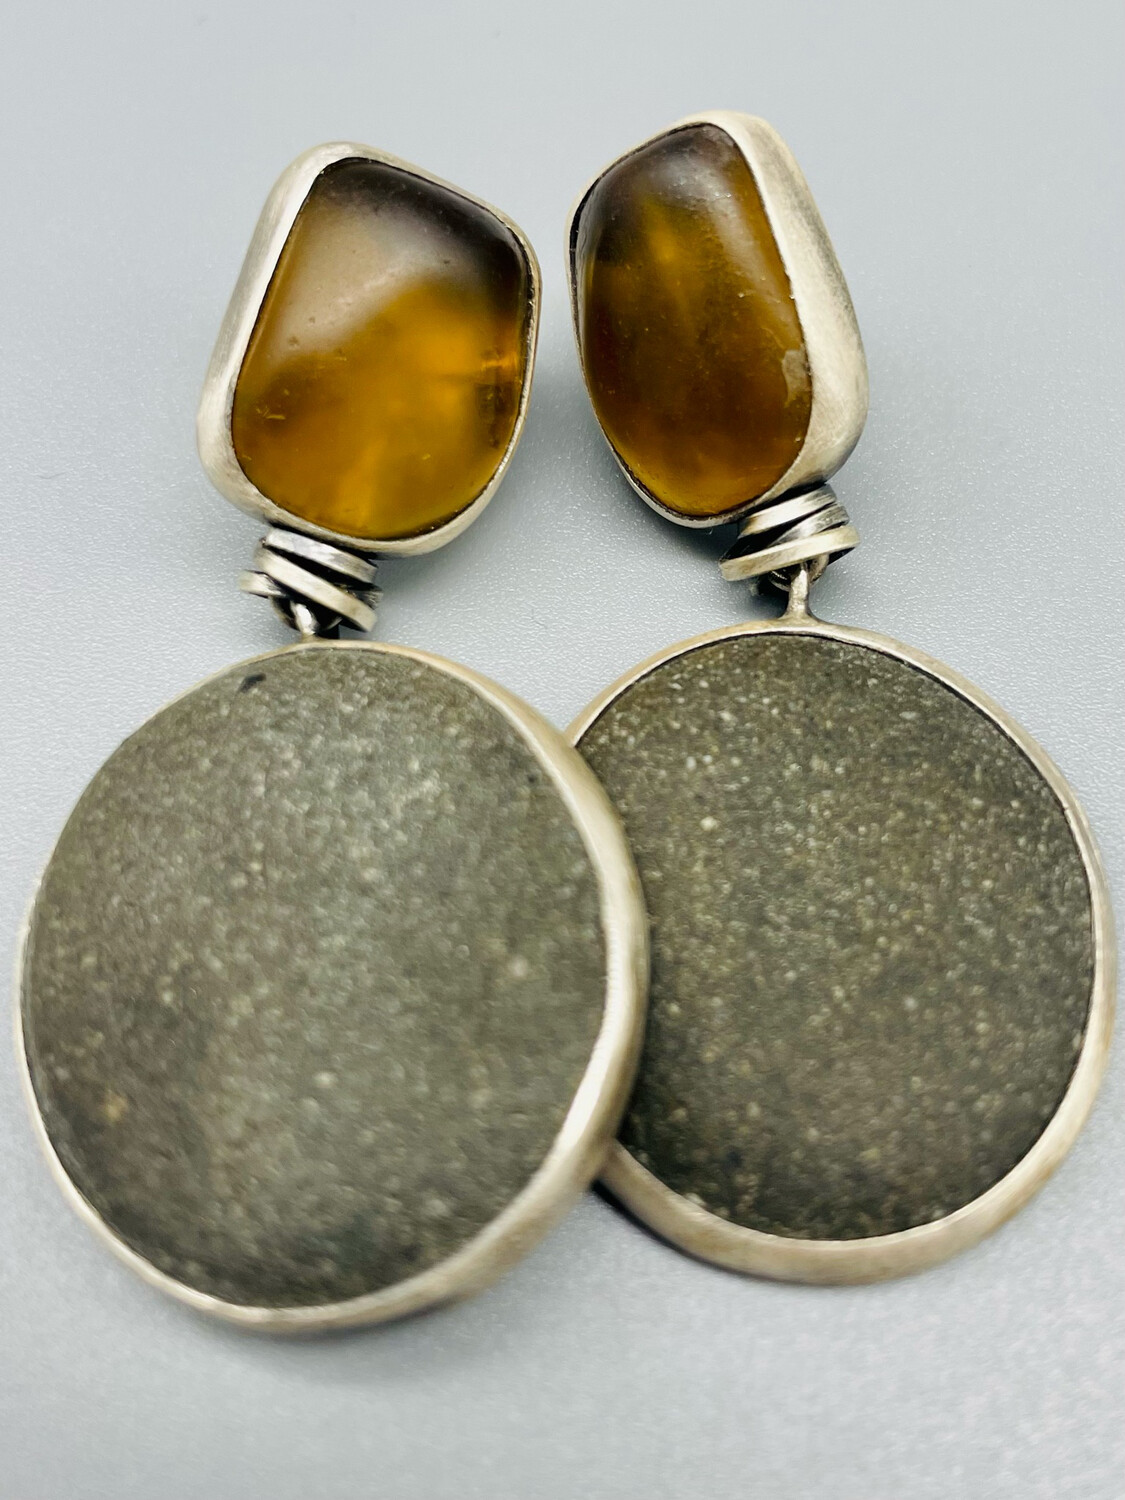 African Amber Glass over Riverstone, SS Earrings, Terri Logan - Richmond IN